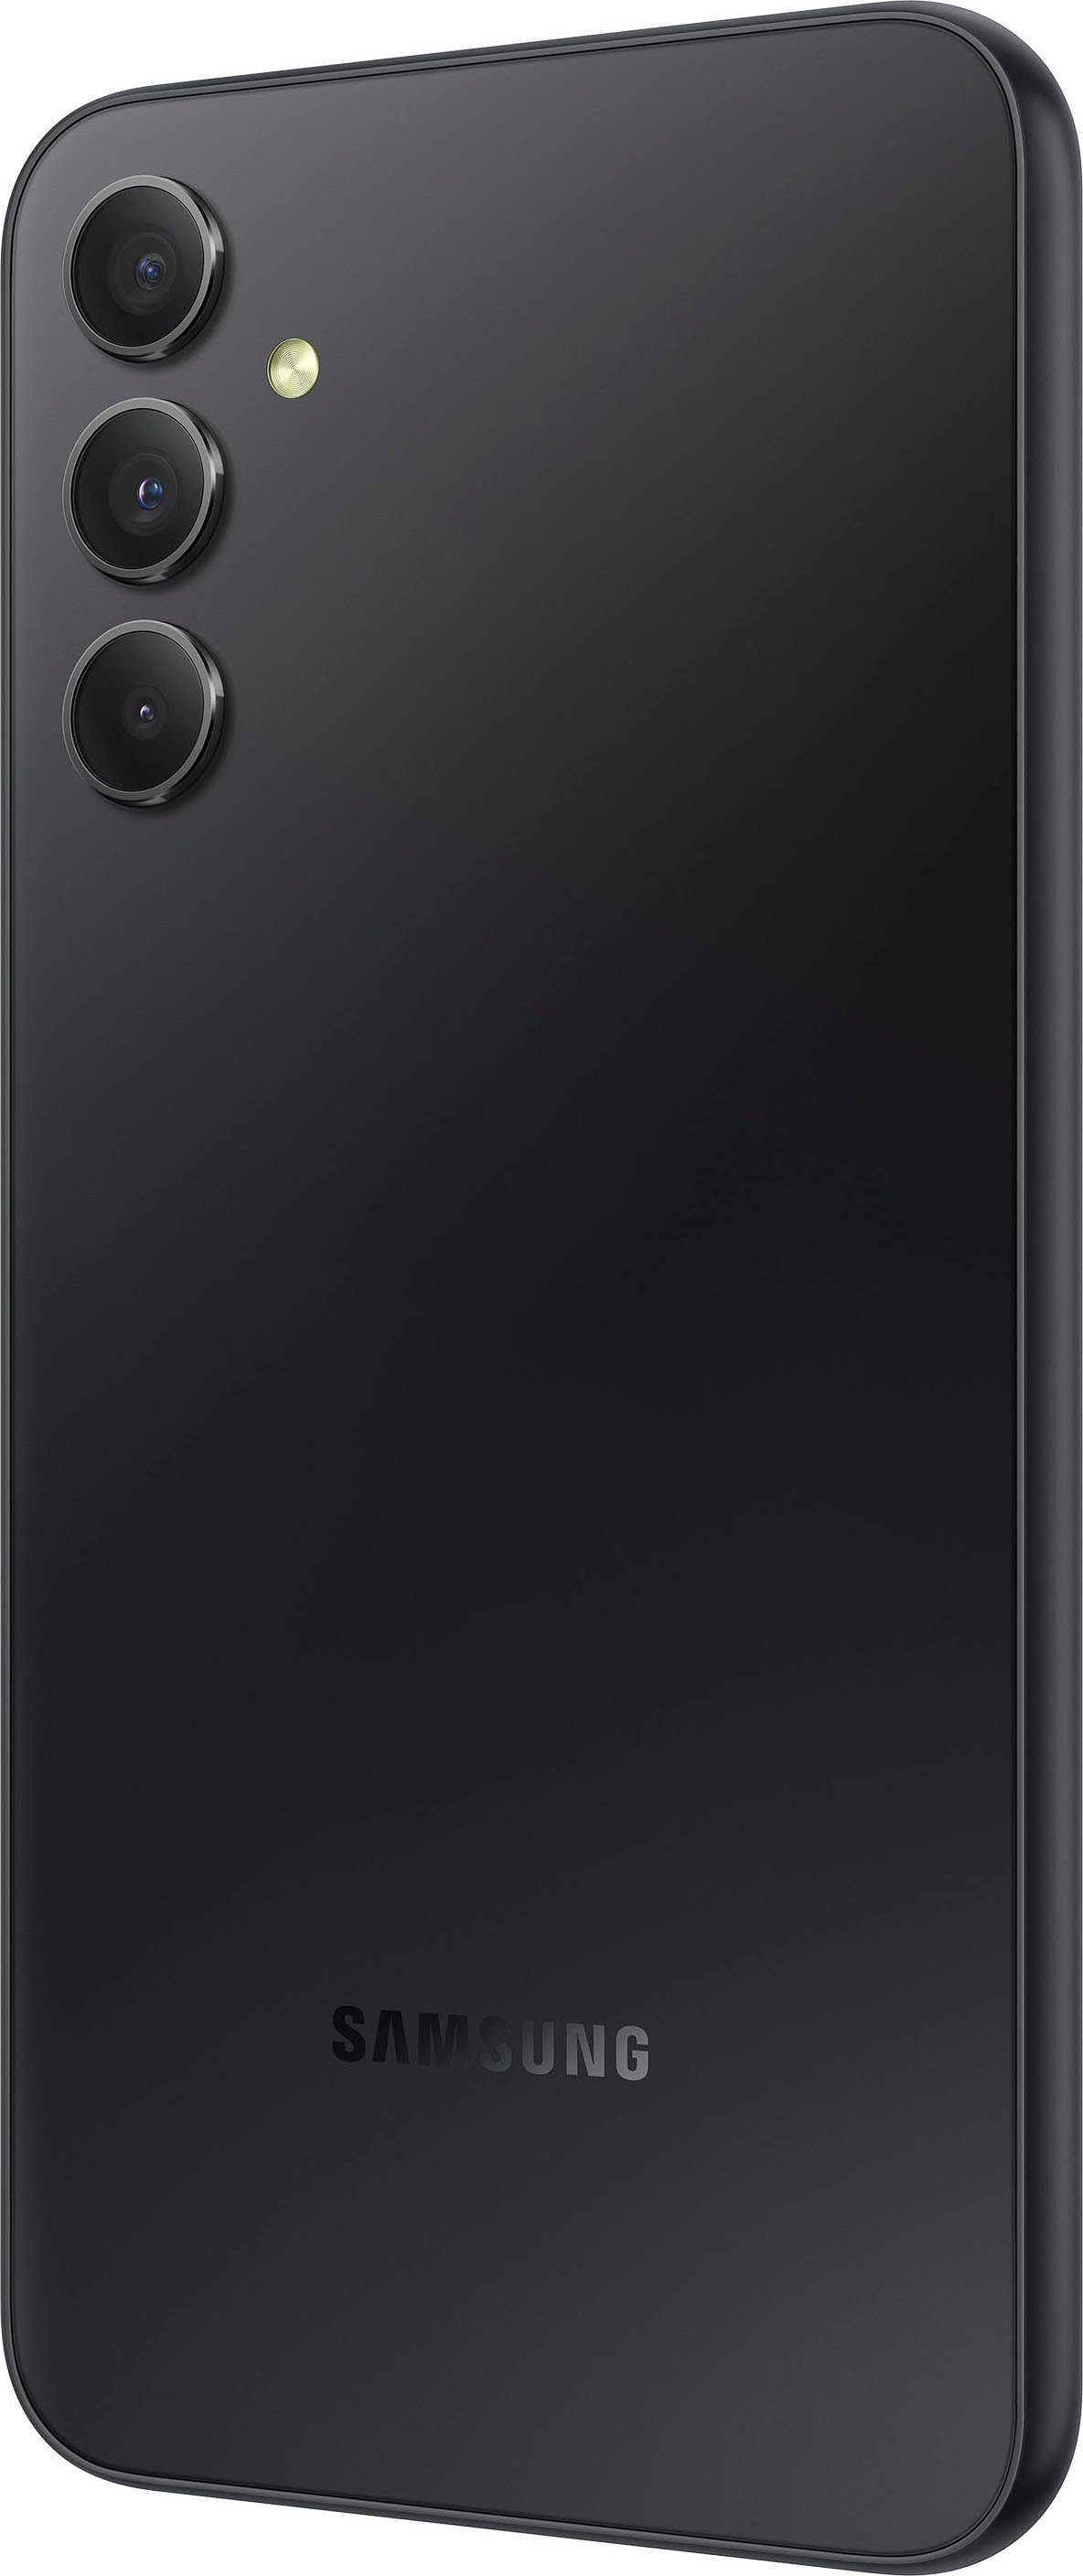 Galaxy 256GB schwarz MP Kamera) Smartphone 5G A34 256 (16,65 cm/6,6 48 Zoll, GB Speicherplatz, Samsung